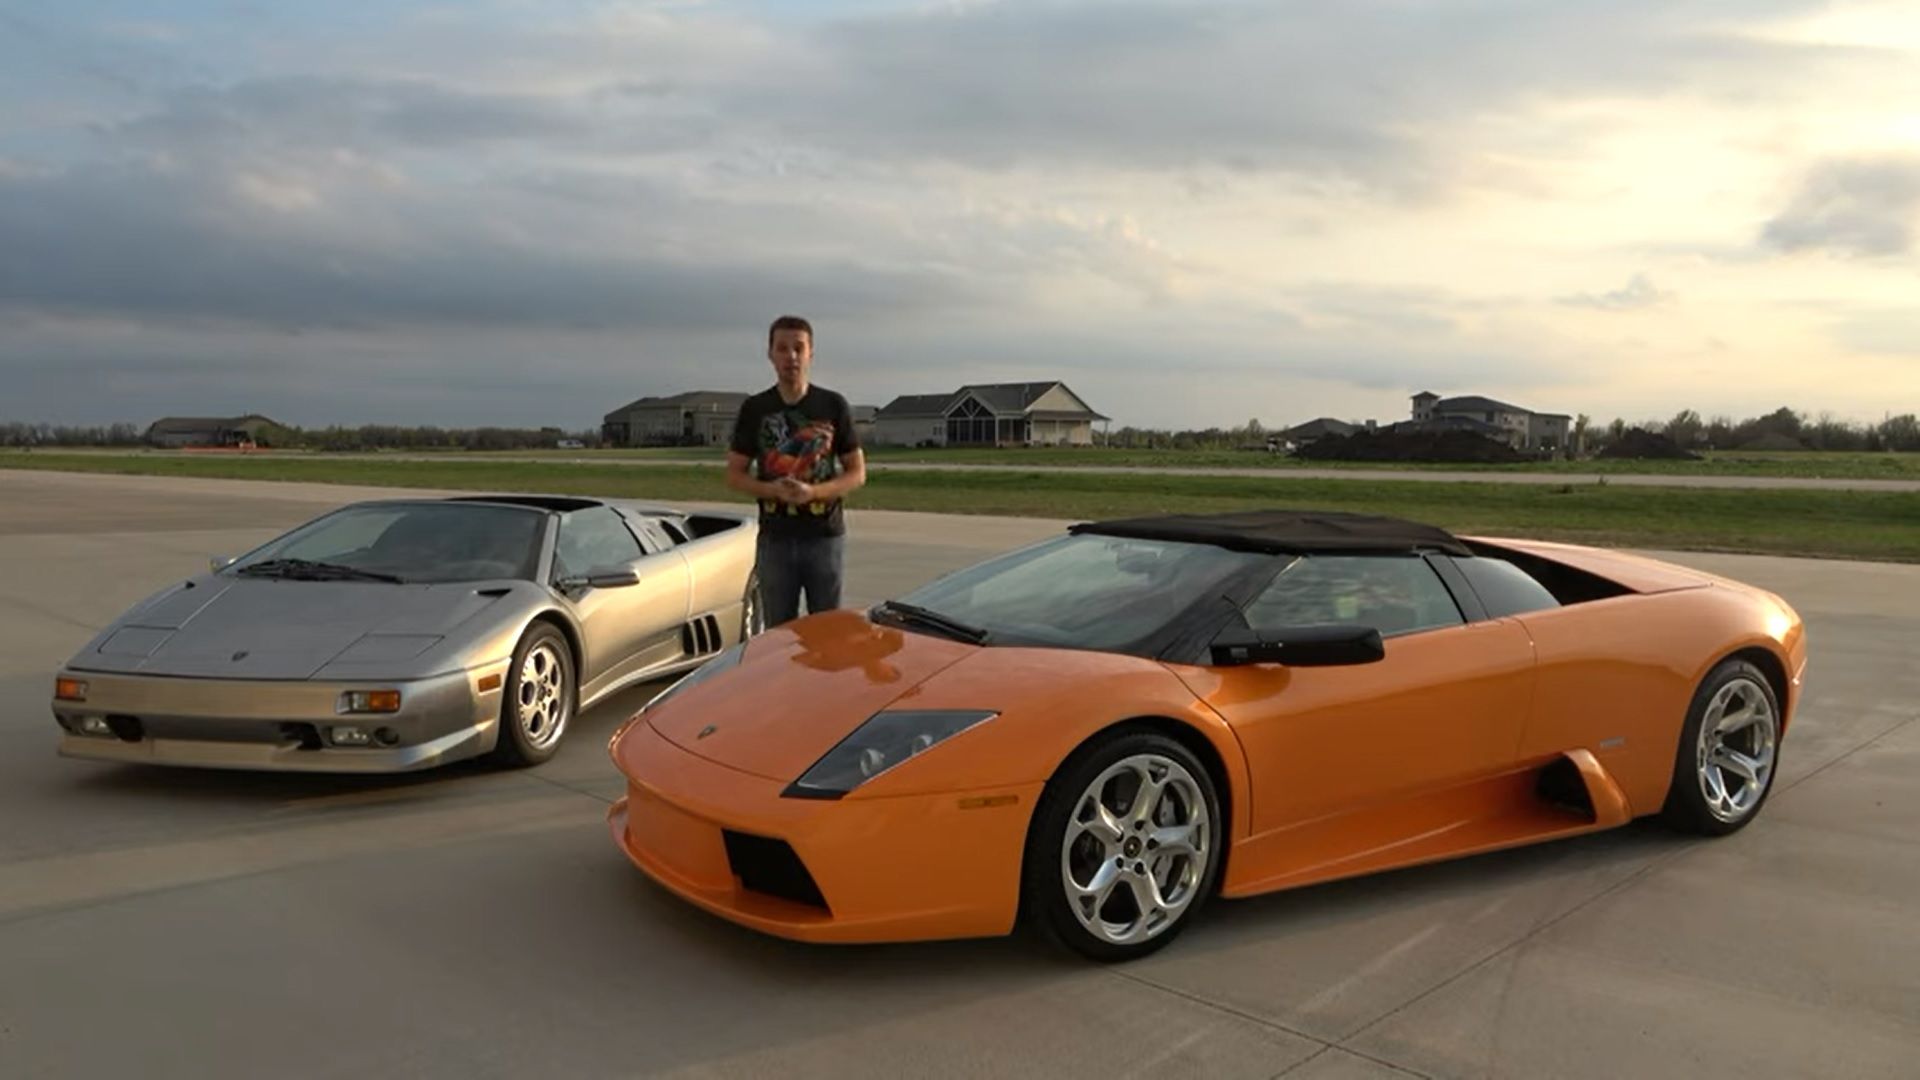 Lamborghini Diablo, silver, and Murcielago, orange, together on runway